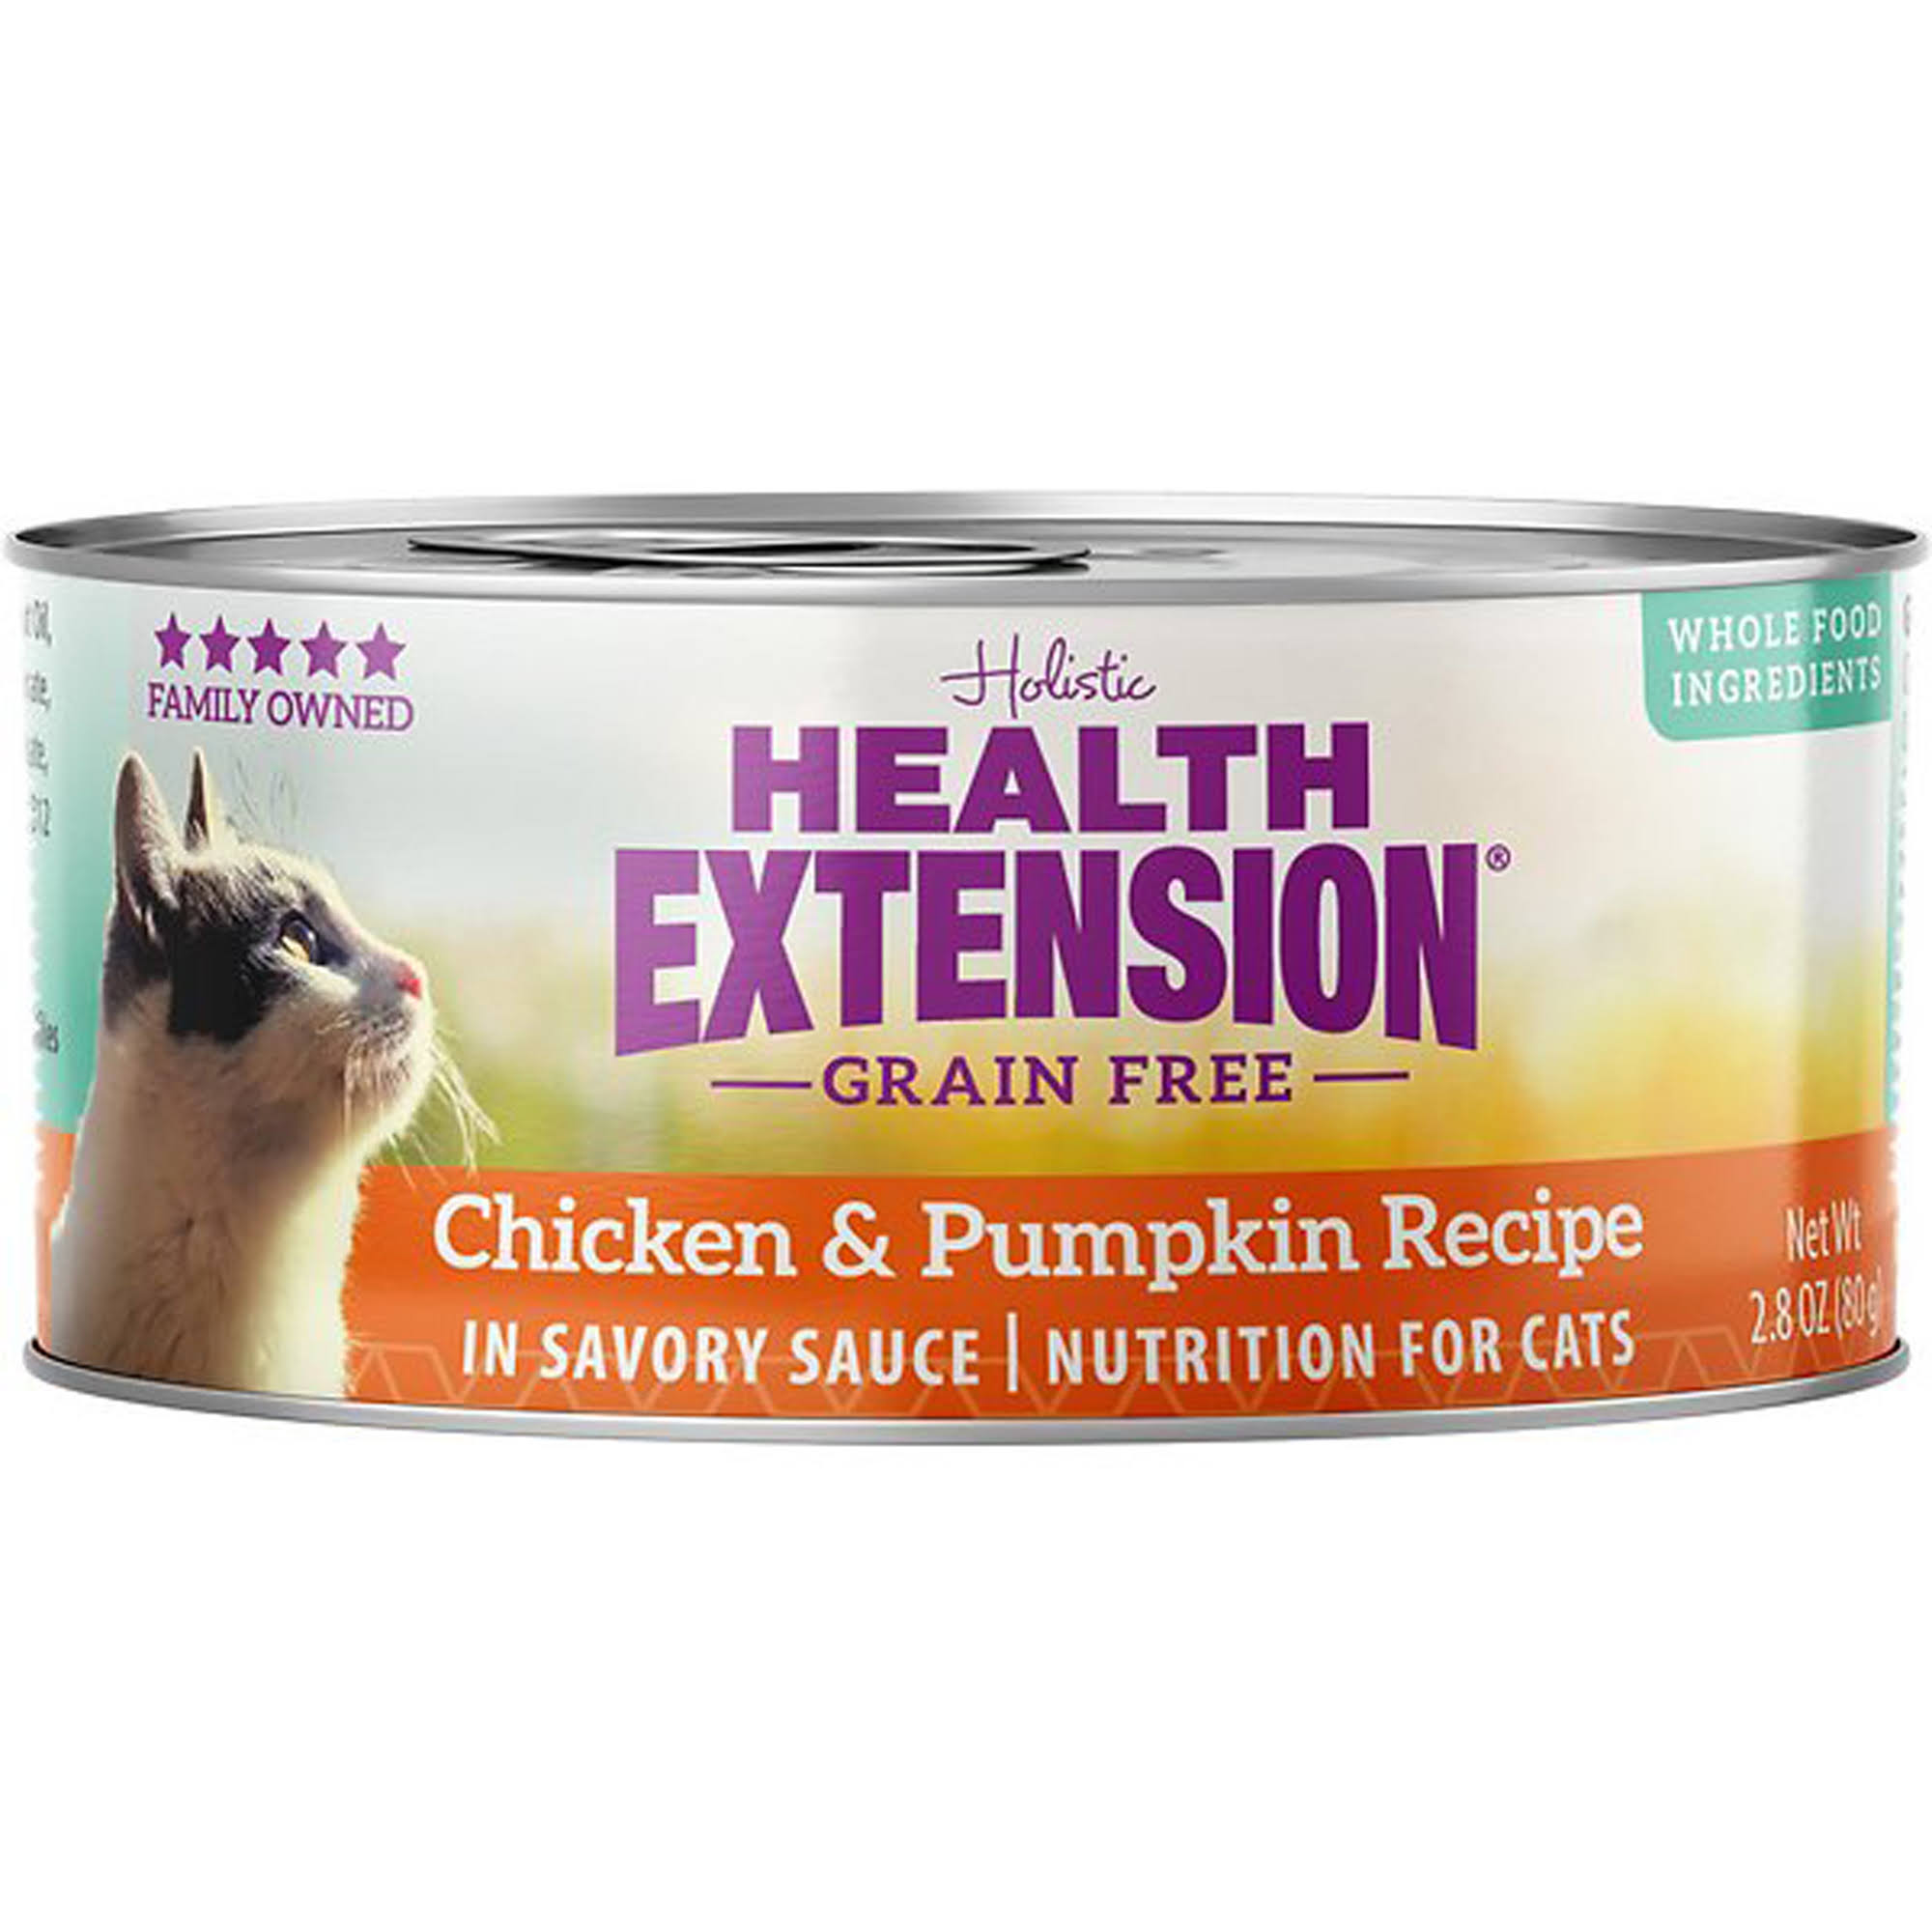 Health Extension Cat Food - Grain Free Chicken & Pumpkin - 2.8 oz